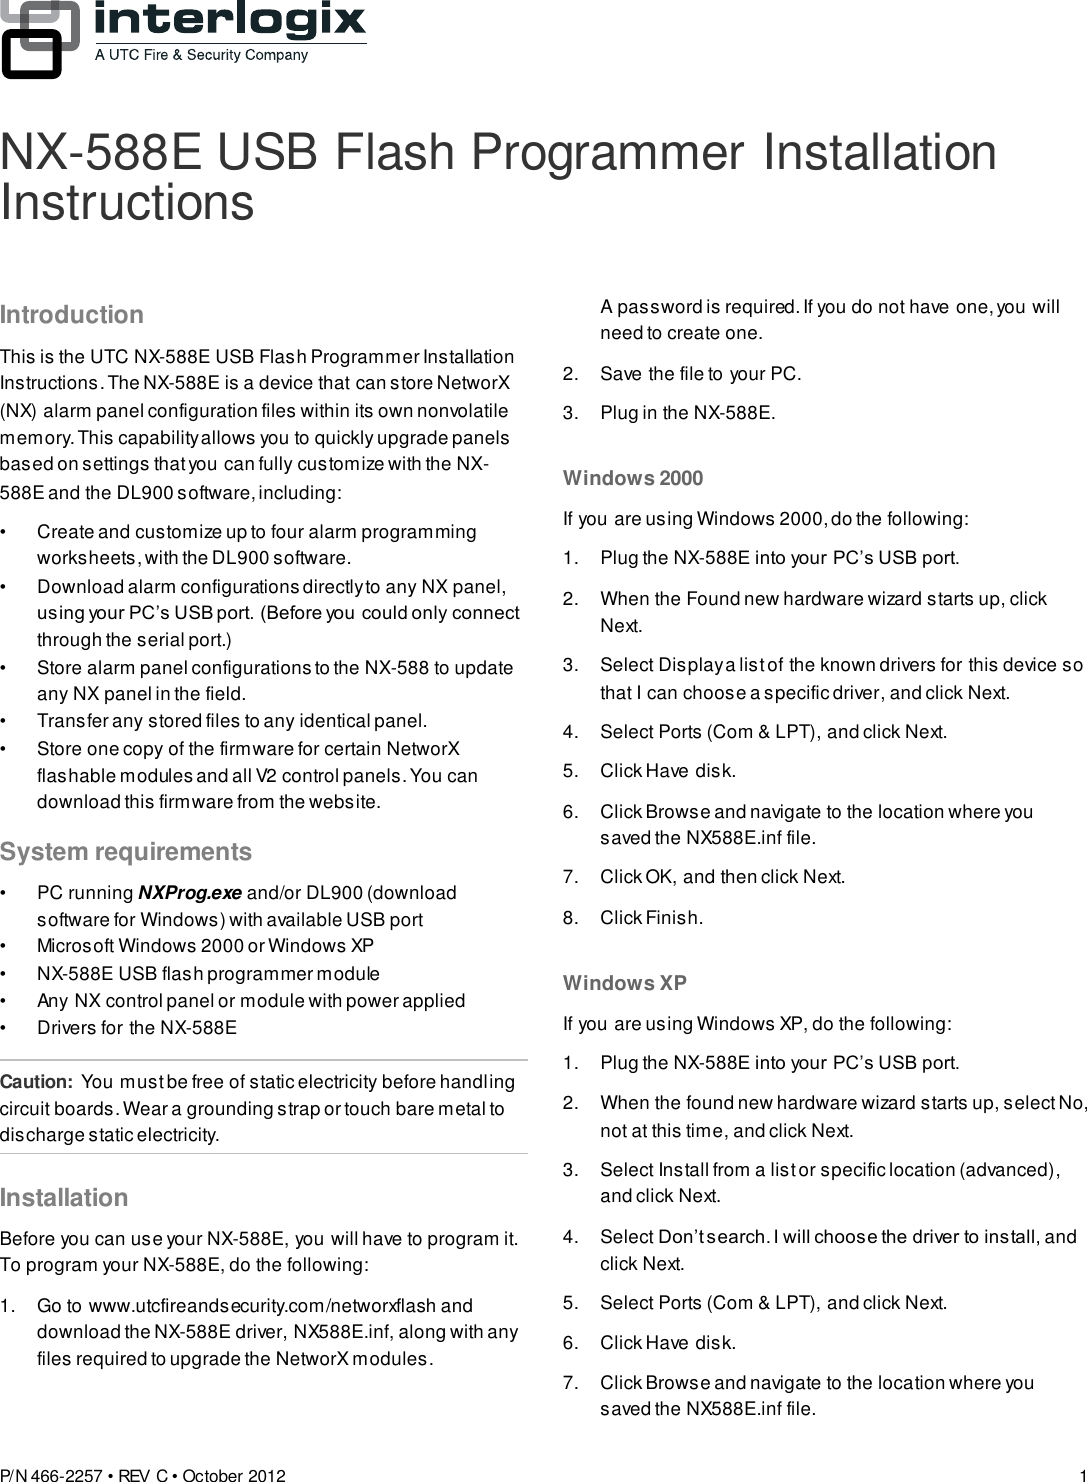 Page 1 of 5 - NX-588E USB Flash Programmer Installation Instructions  466-2257 REV C